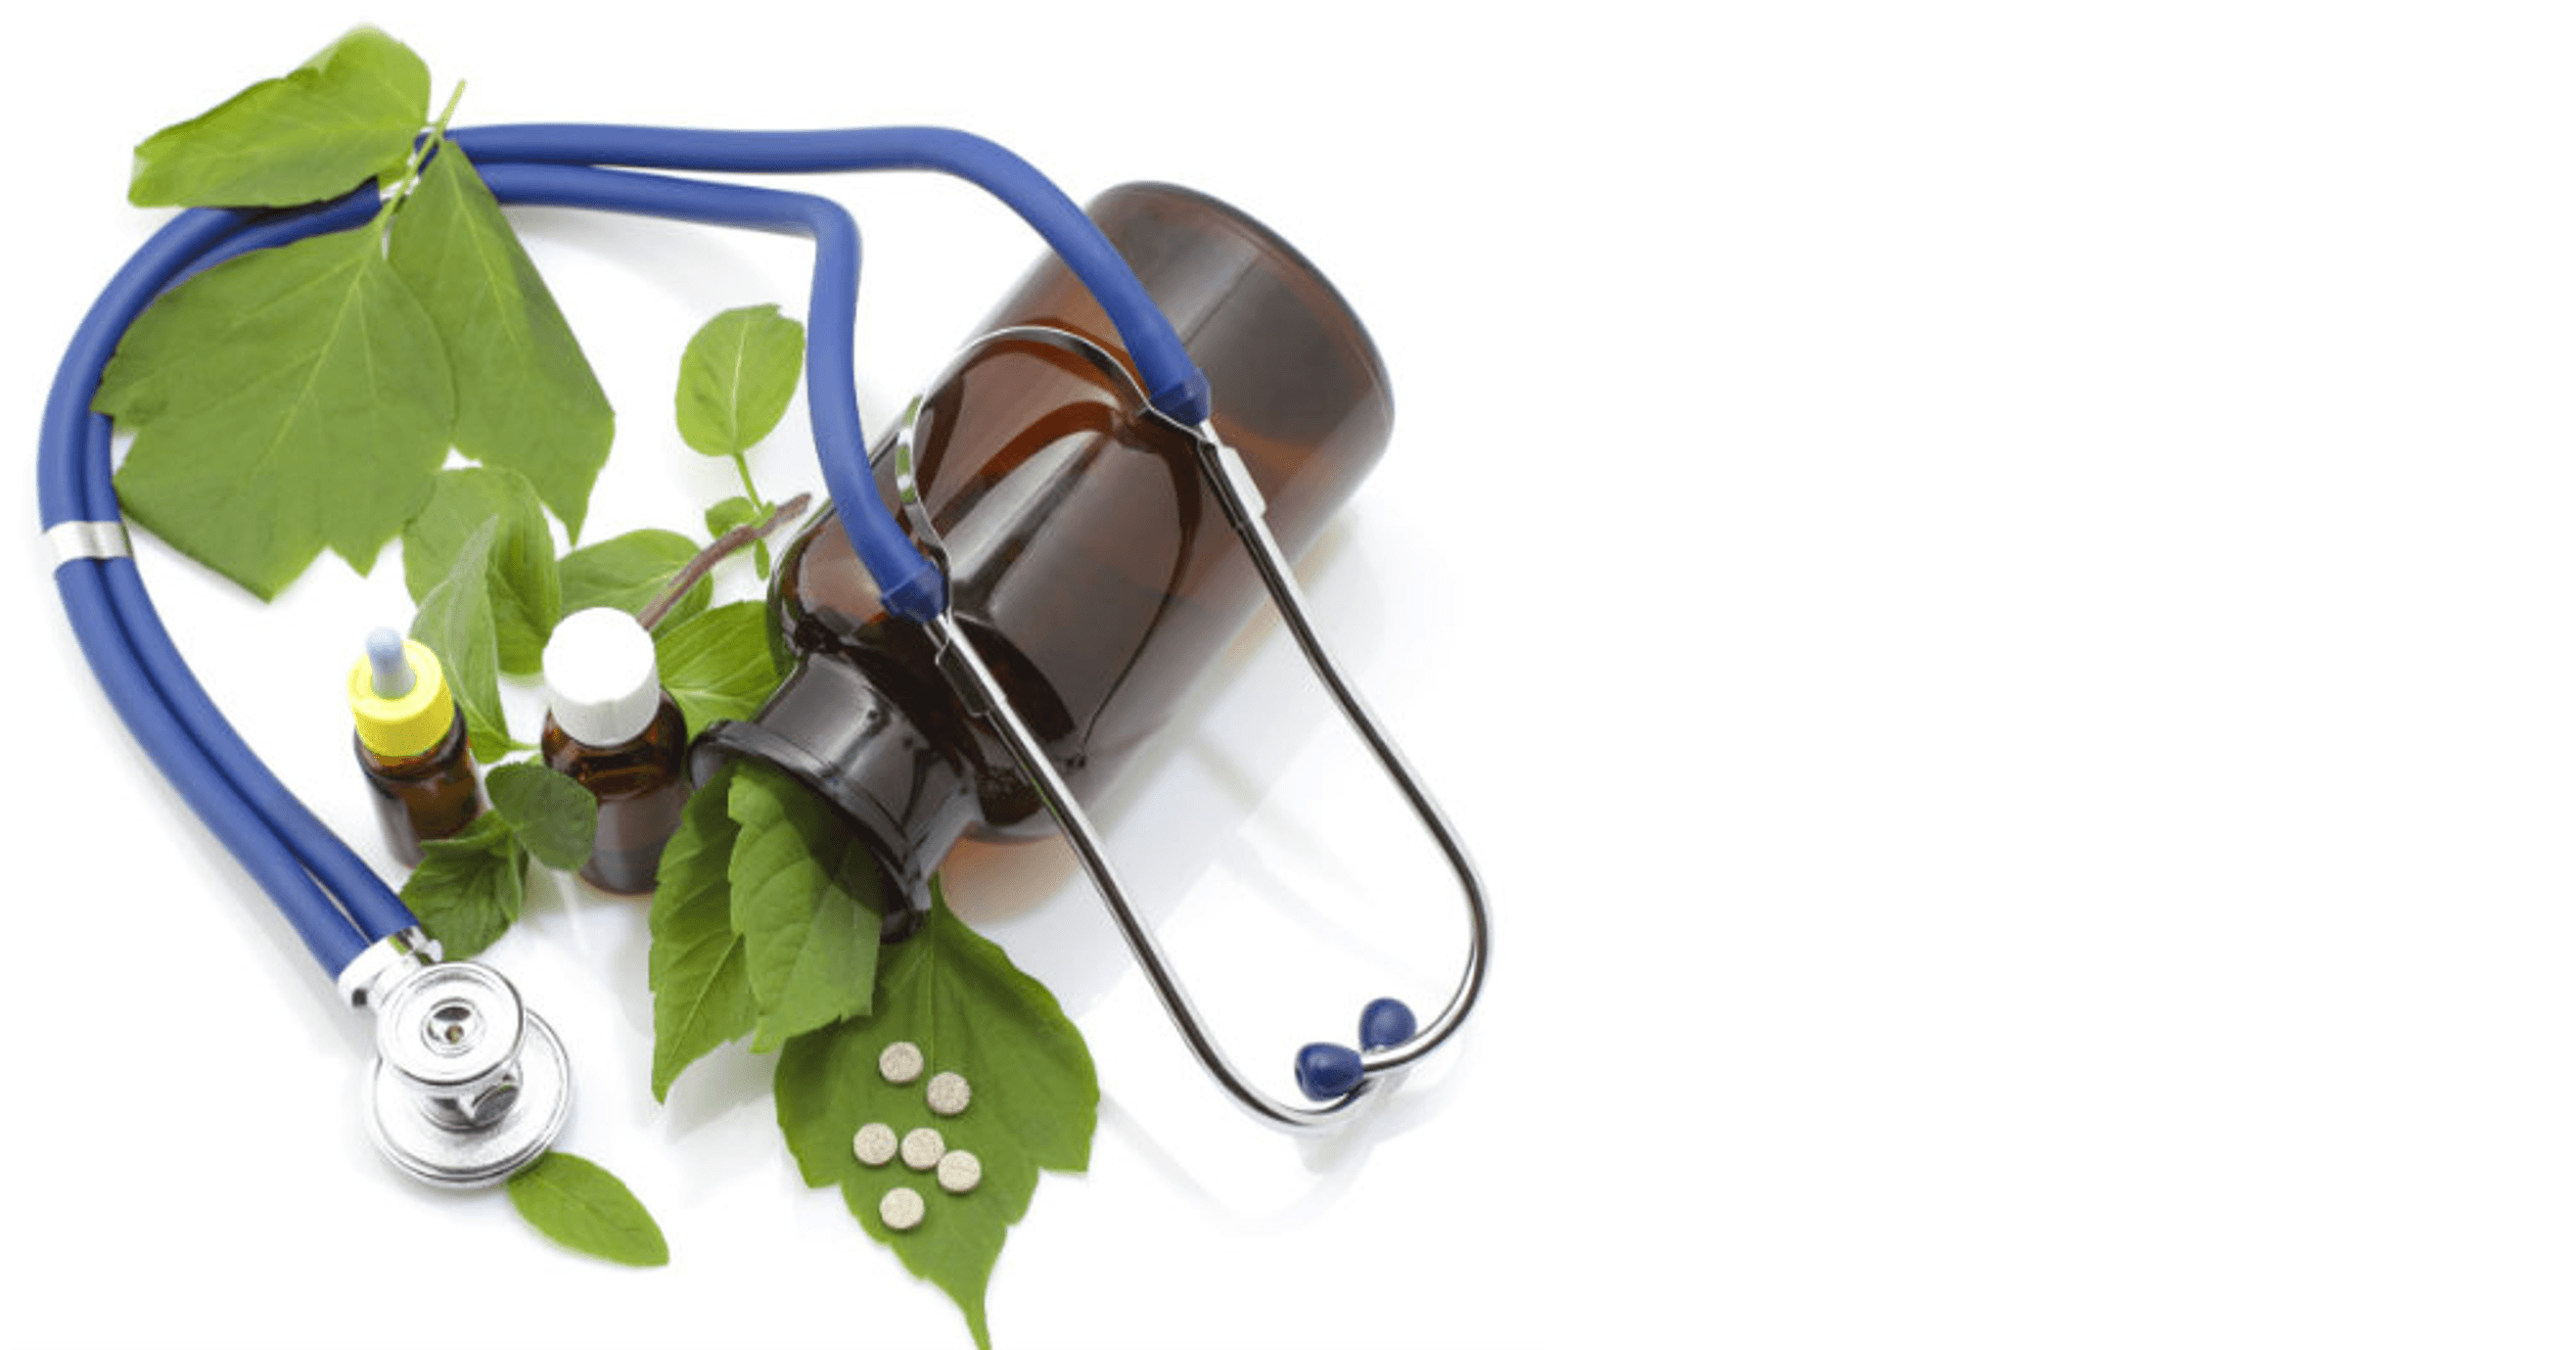 Herbs for Organ Health (Part II)